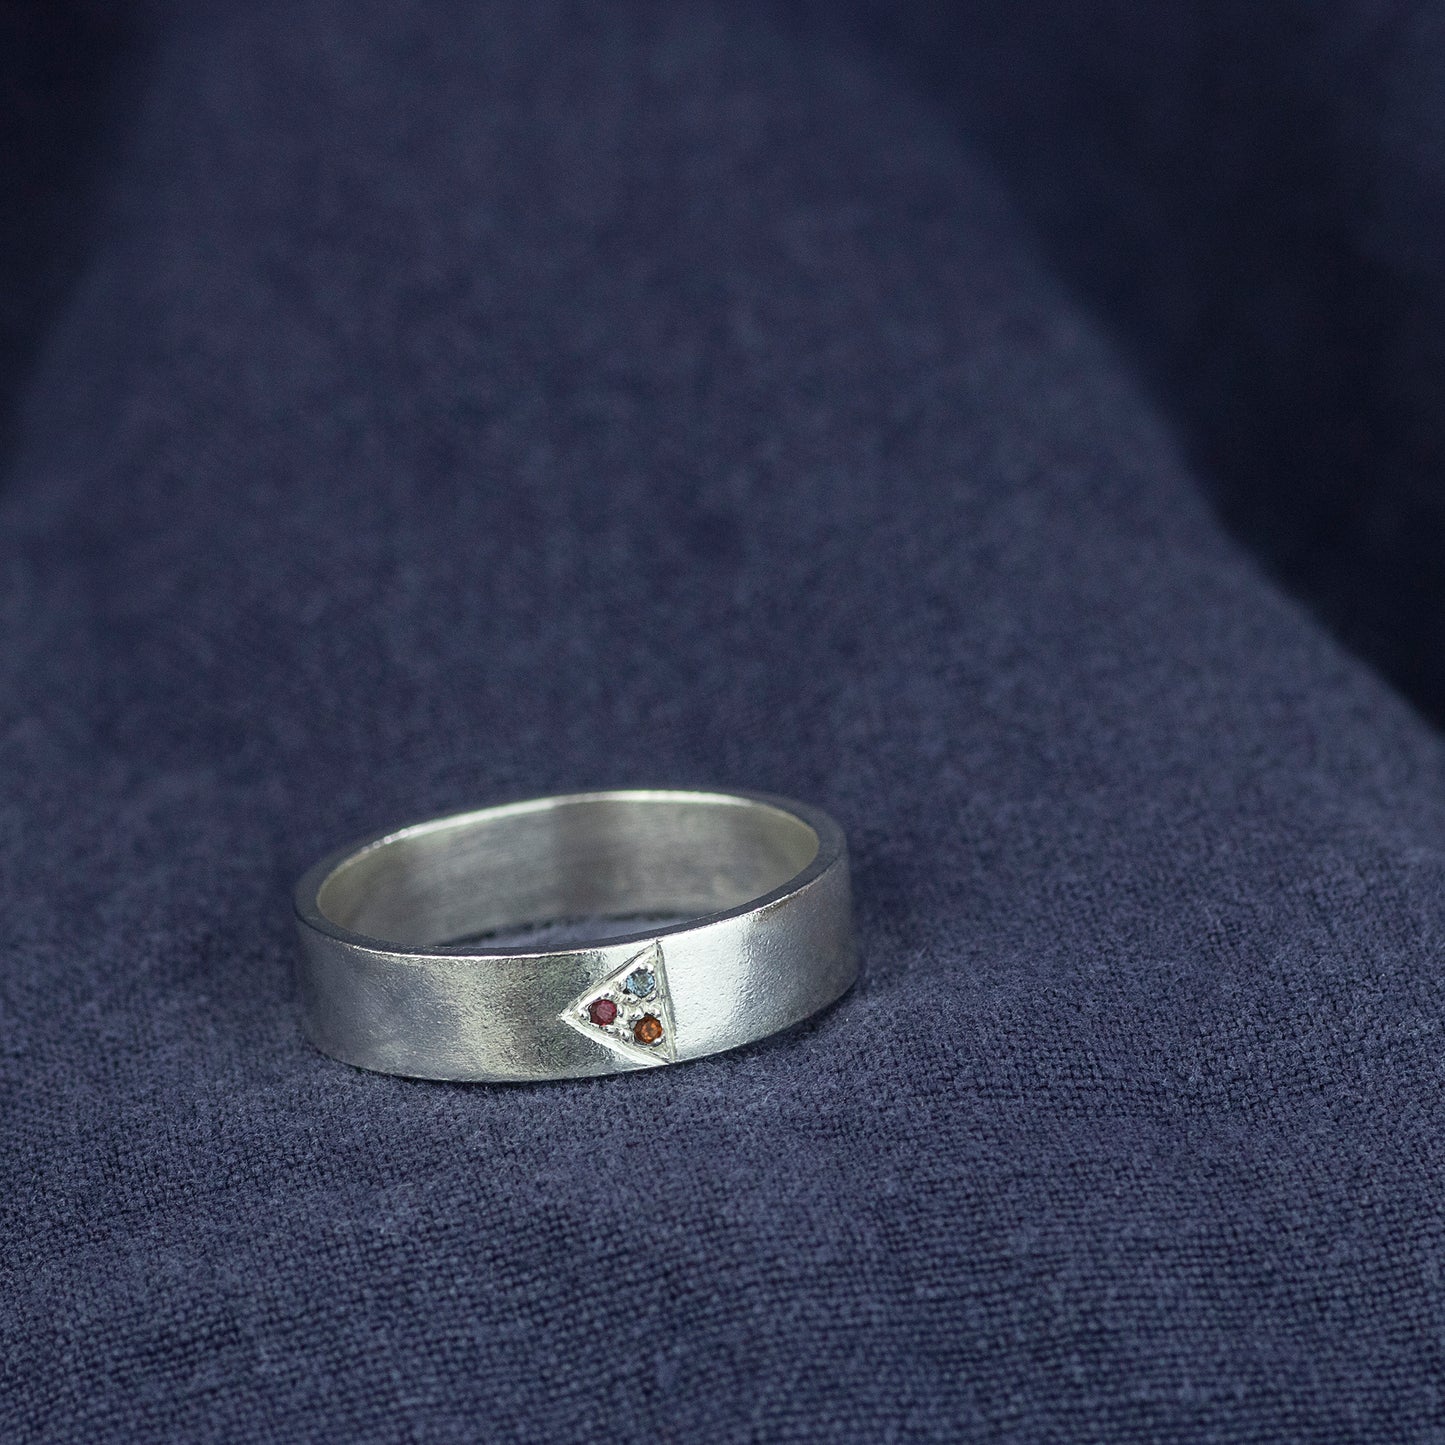 Men's Silver Ring - 3 Birthstones for 3 Loved Ones